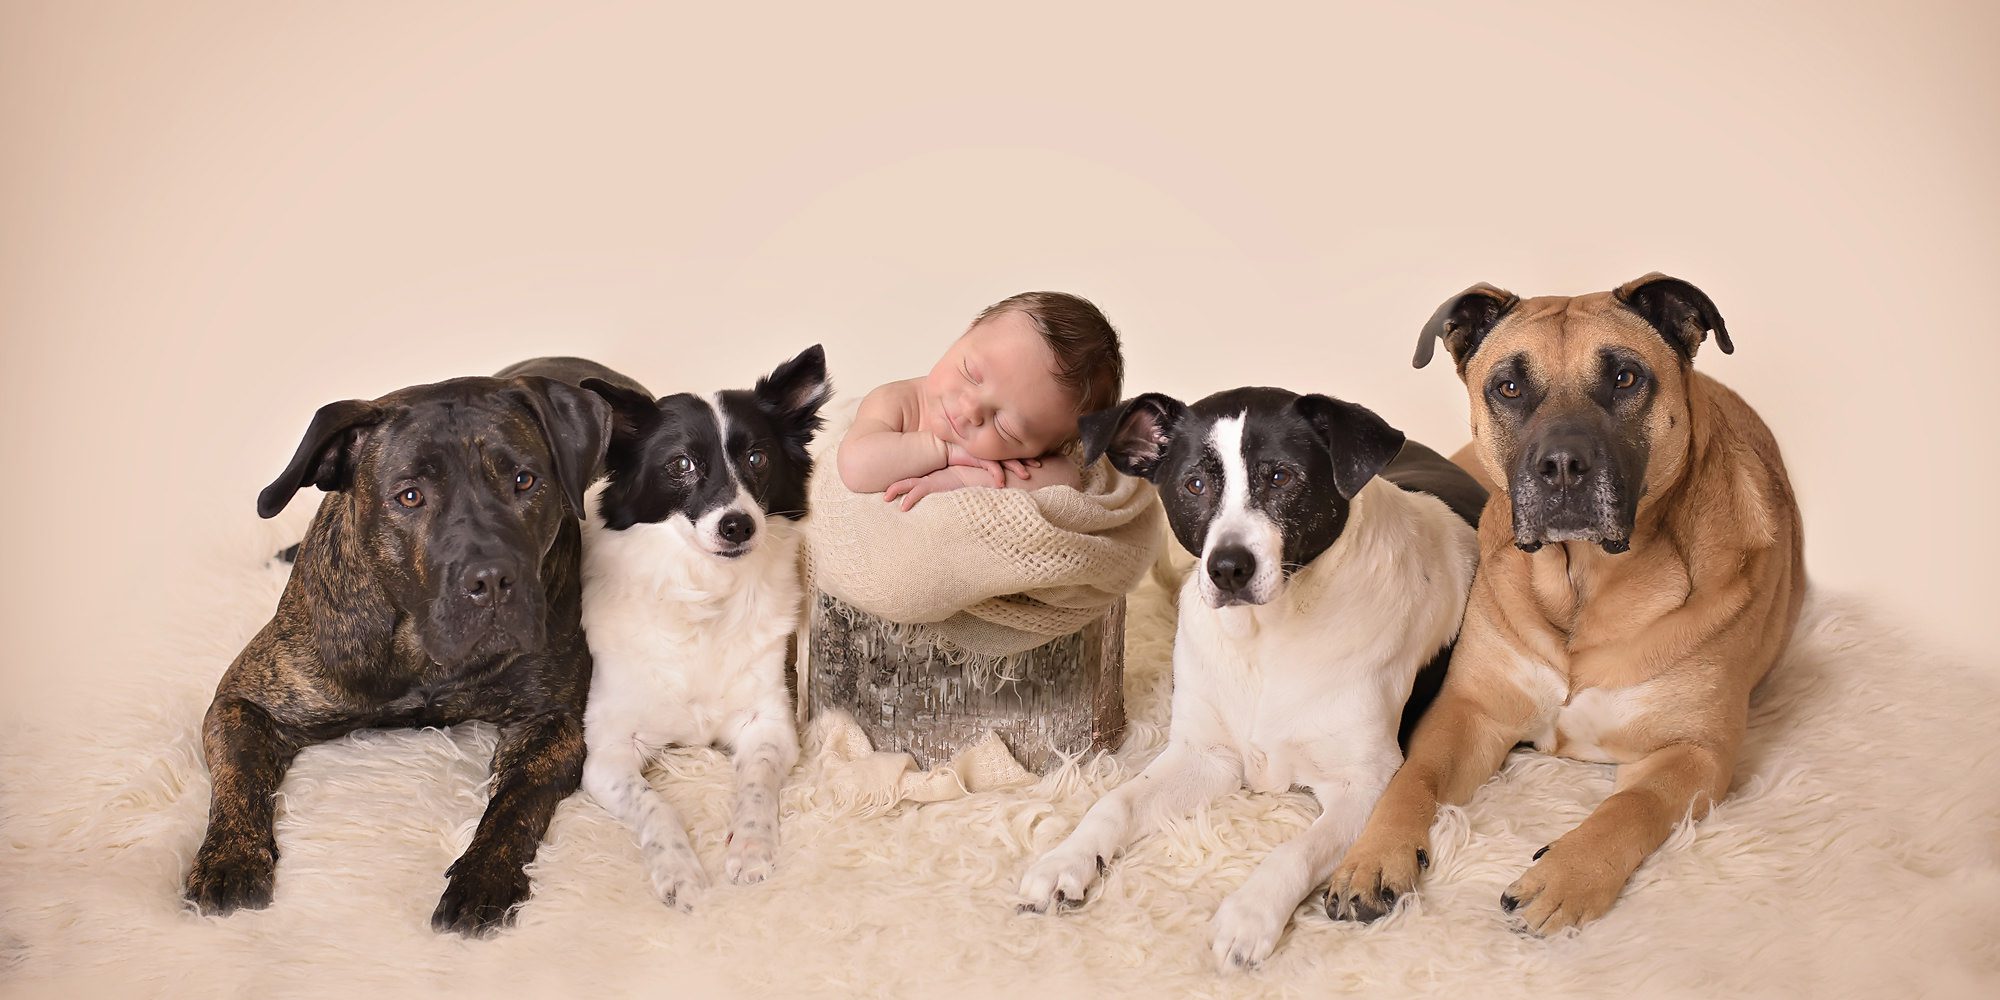 newborn boy and dogs